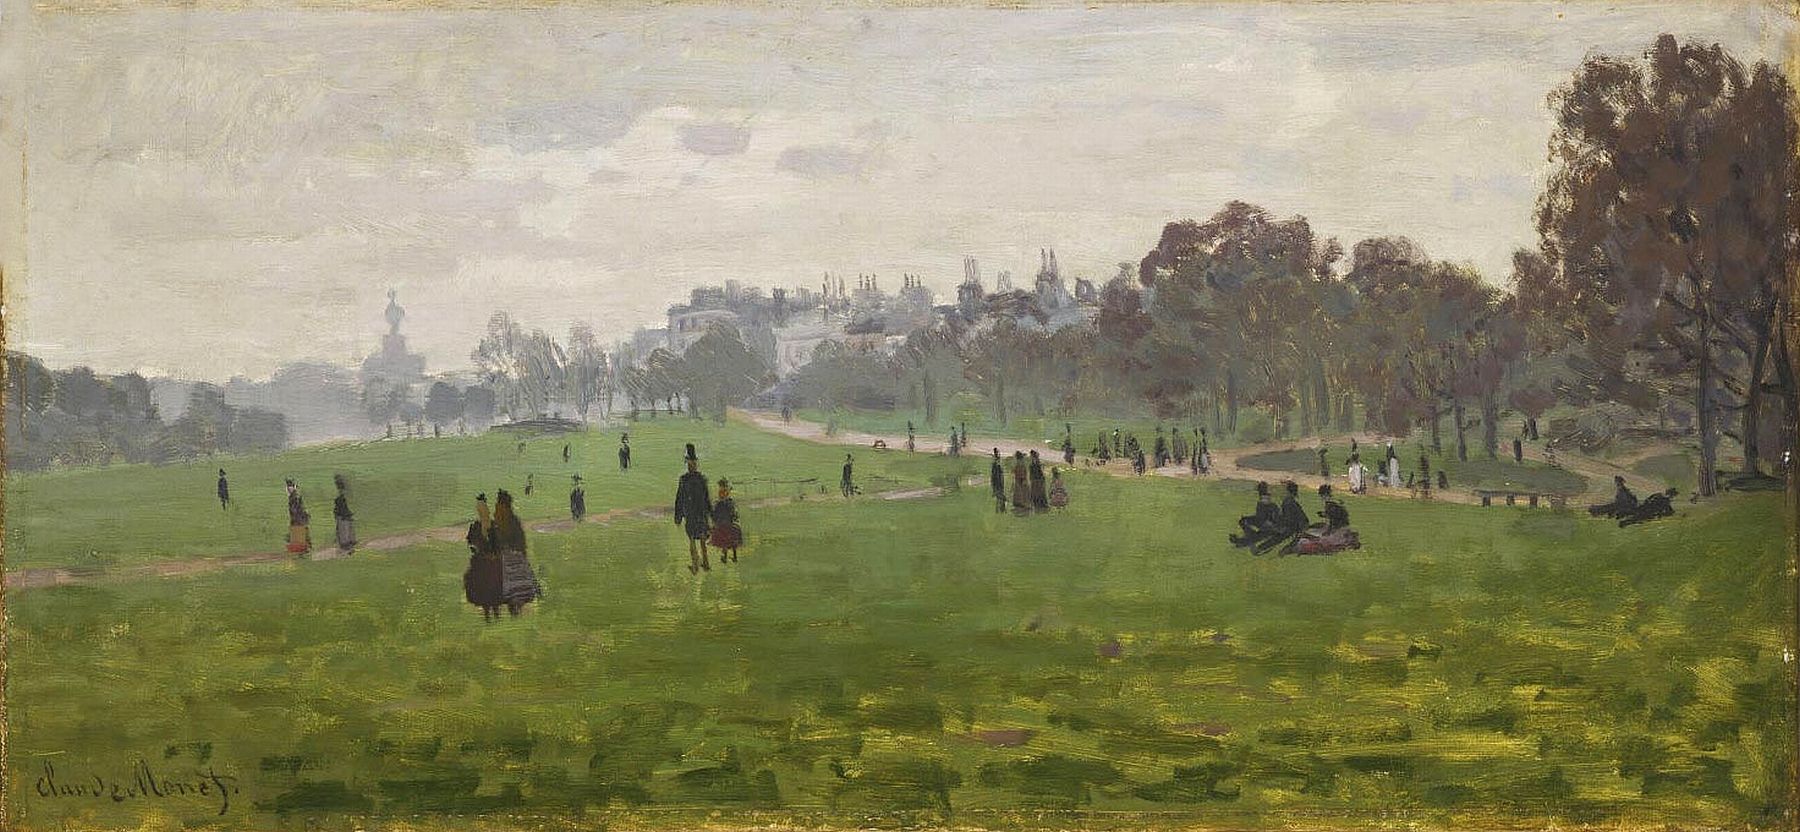 Green Park in London 1871